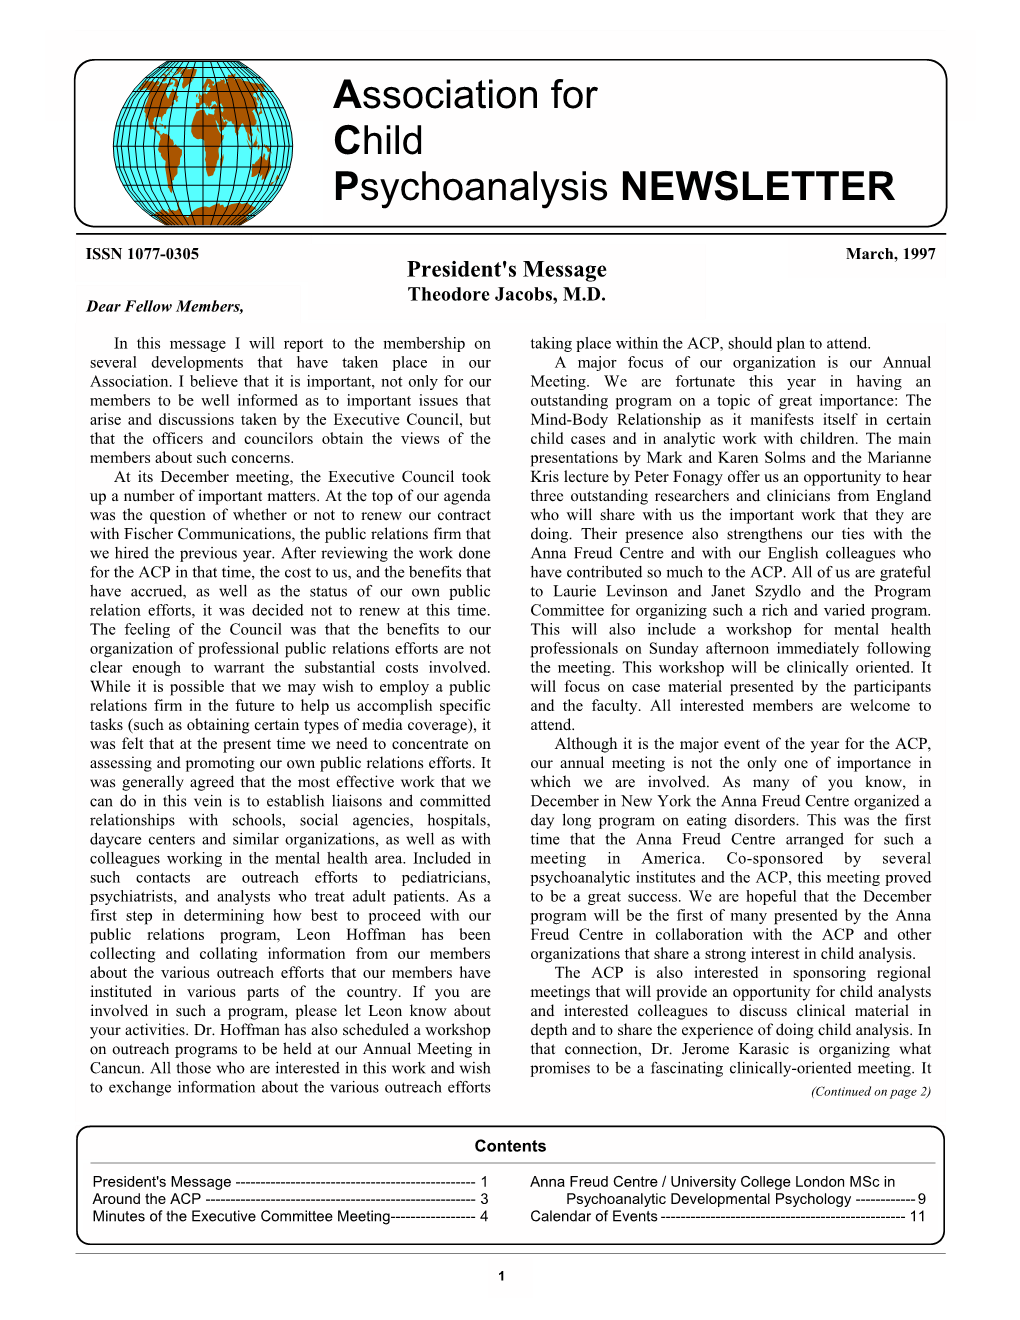 Association for Child Psychoanalysis Newsletter � � � March, 1997 Association for Child Psychoanalysis NEWSLETTER